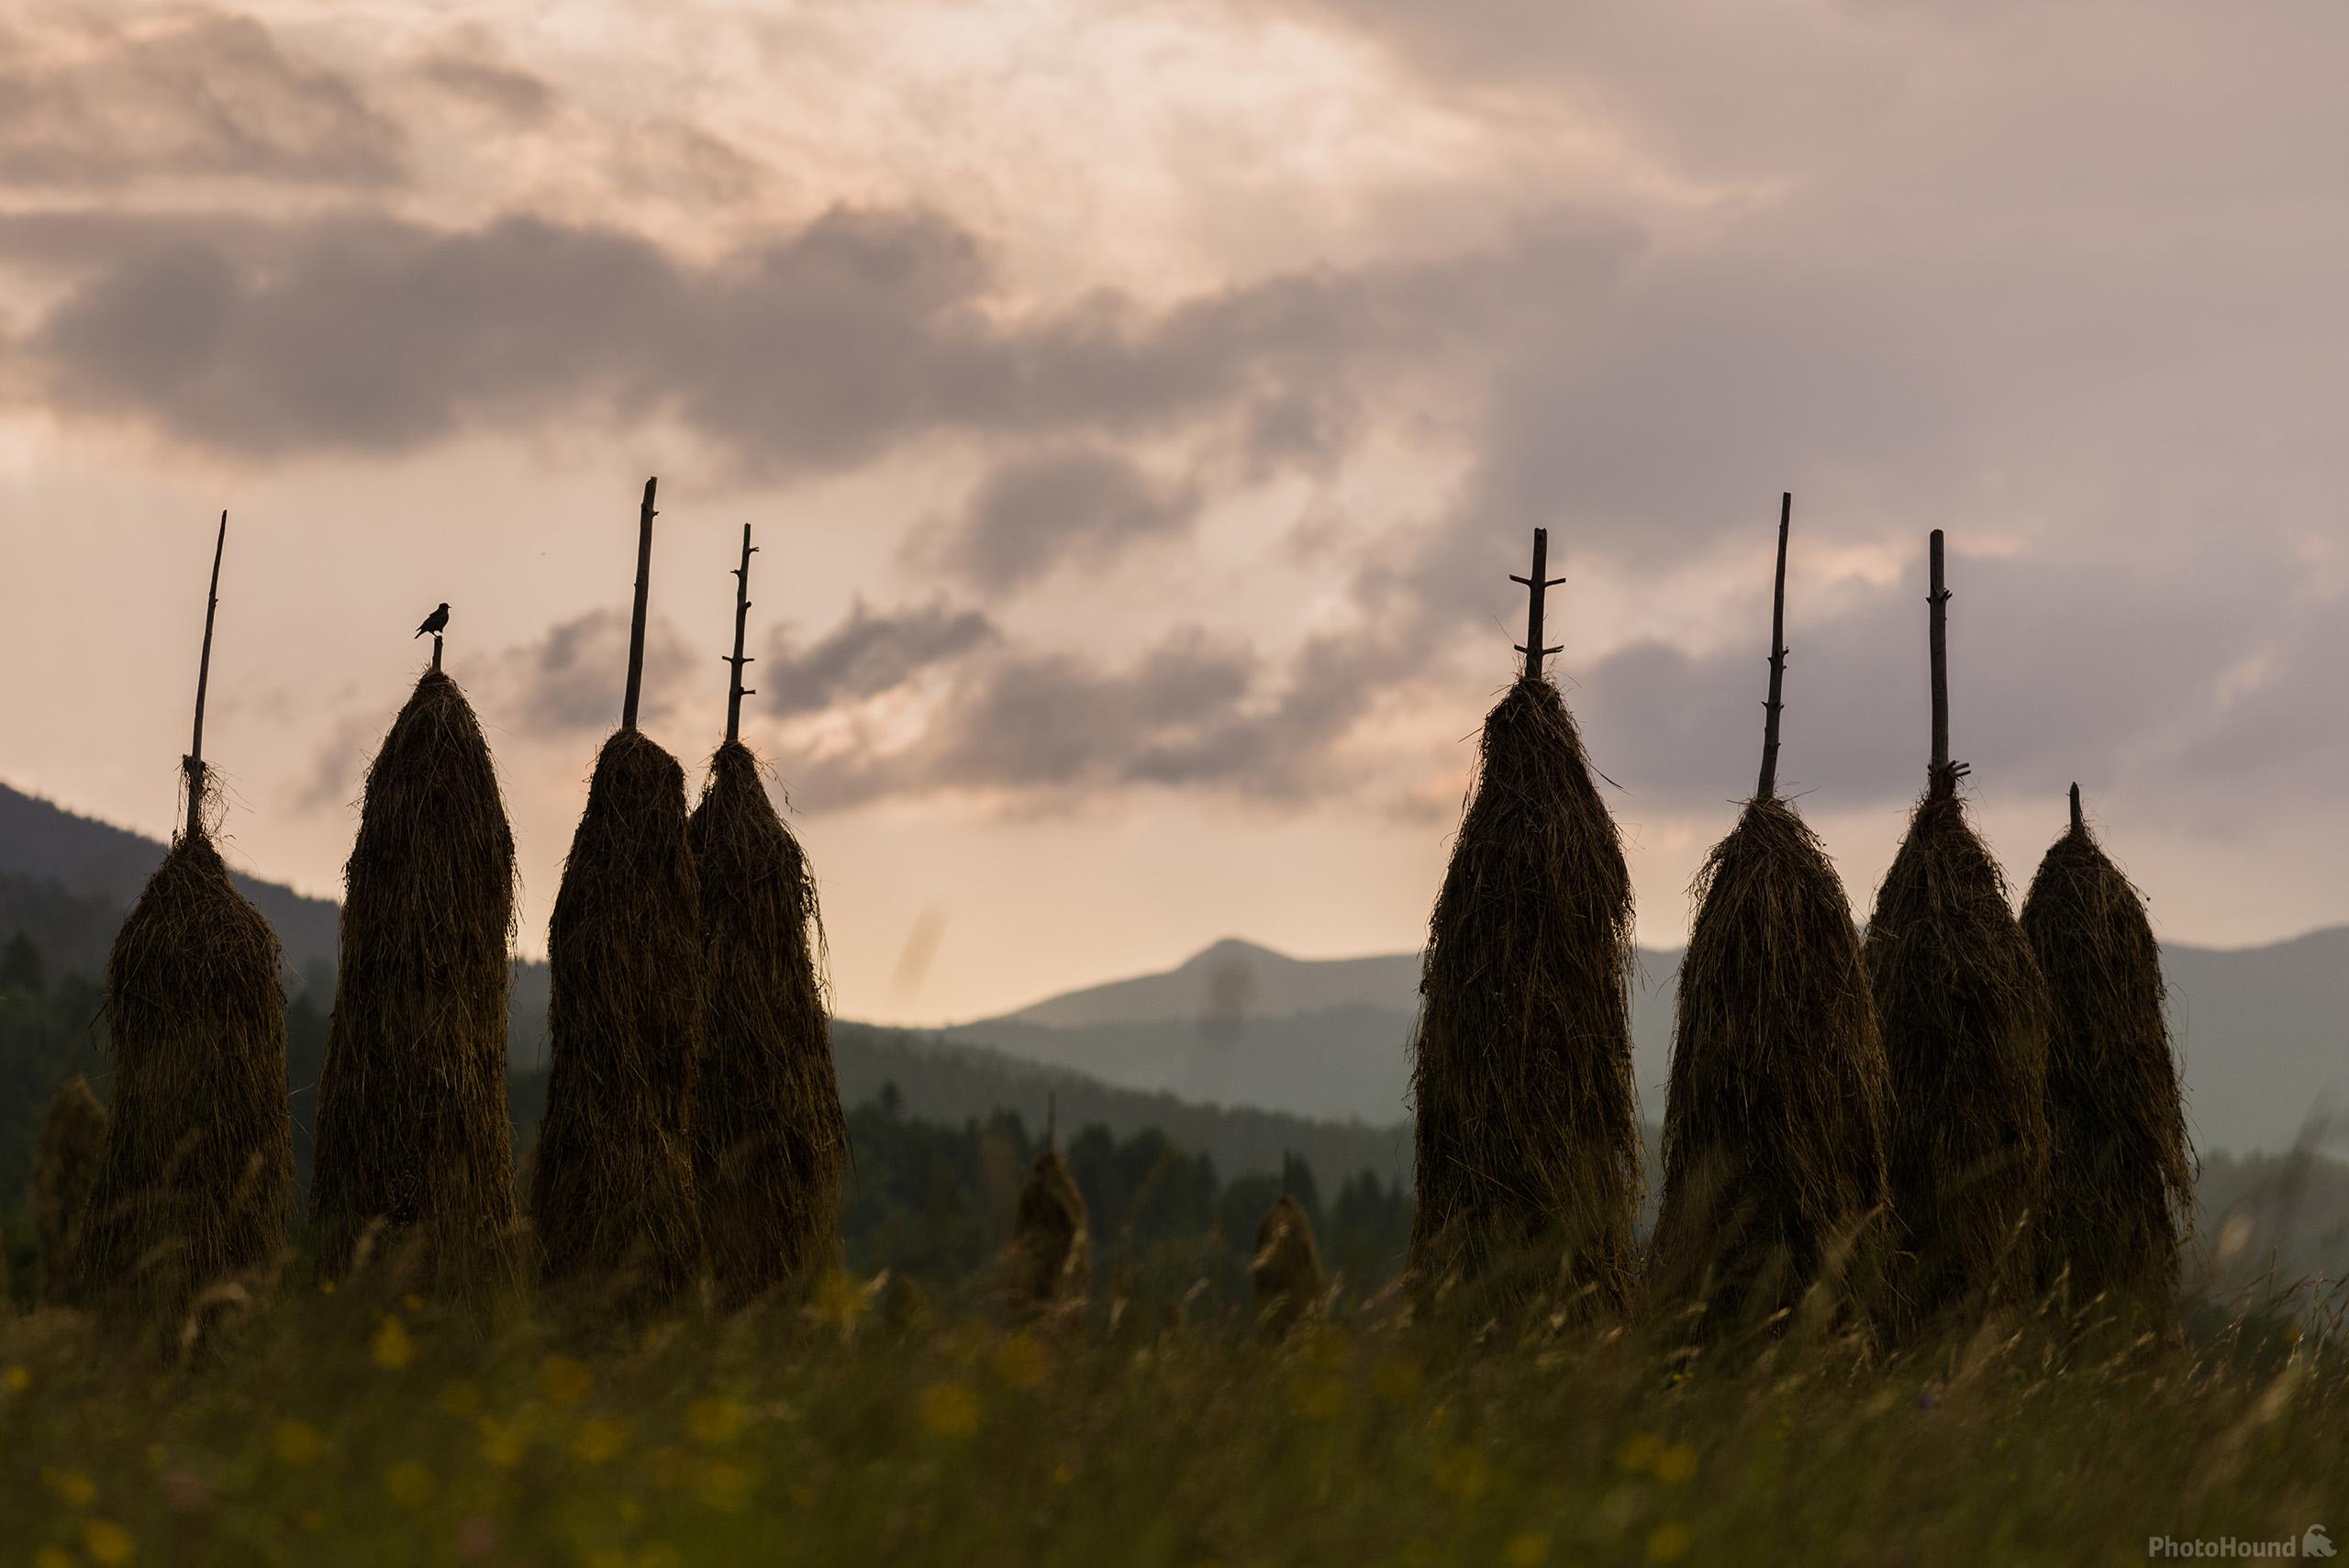 Image of Haystacks (Ostrnice) at Podgora by Luka Esenko